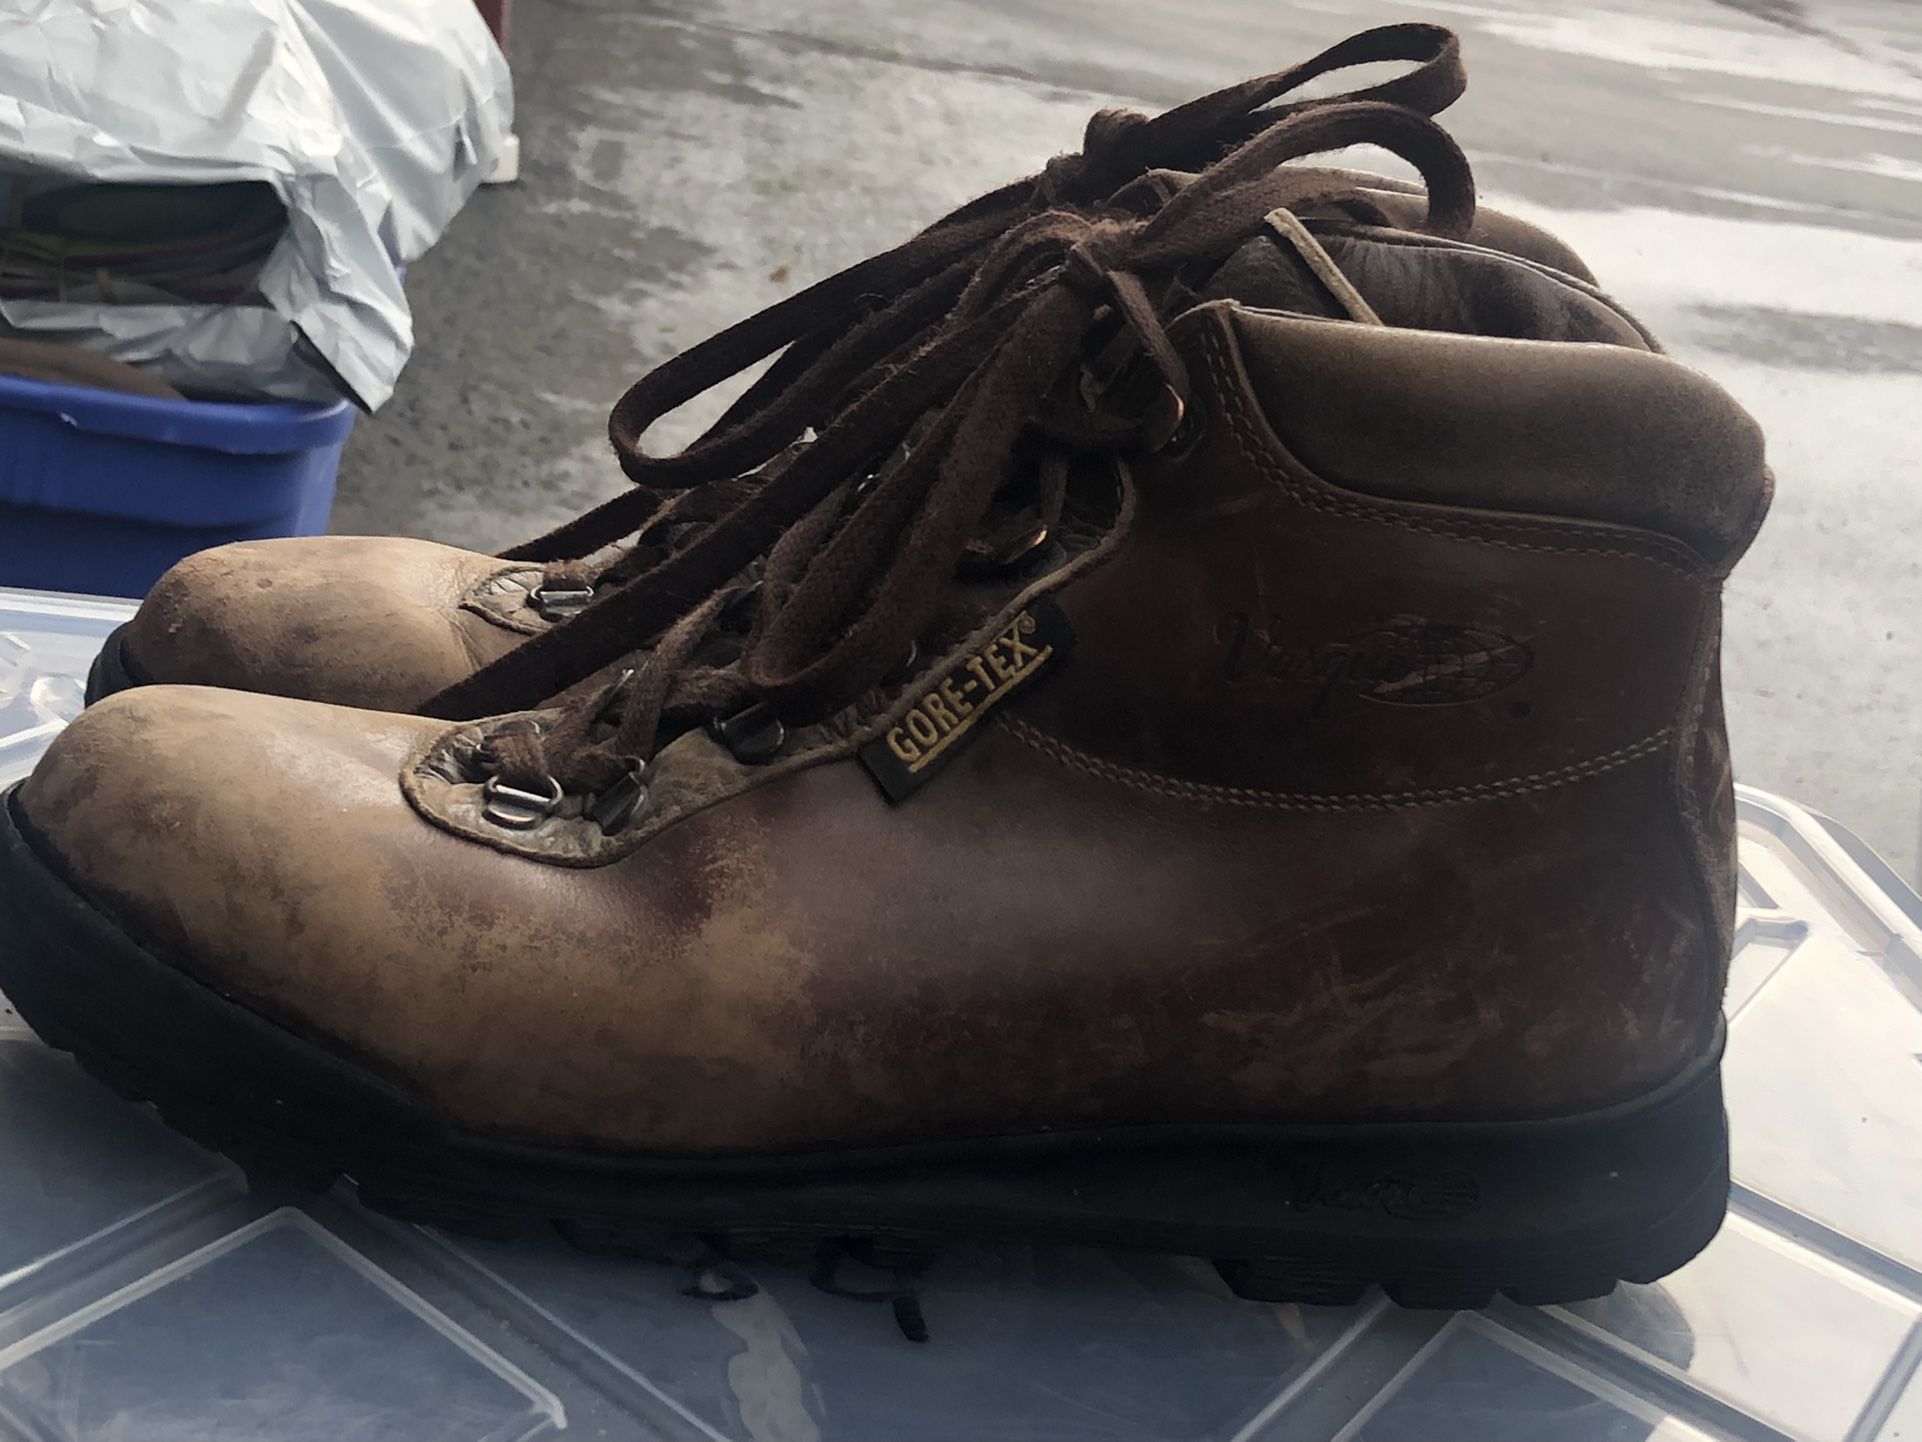 Vasque 7994 Gore-Tex Skywalk Men’s Hiking Brown Leather Boots Size 9W 